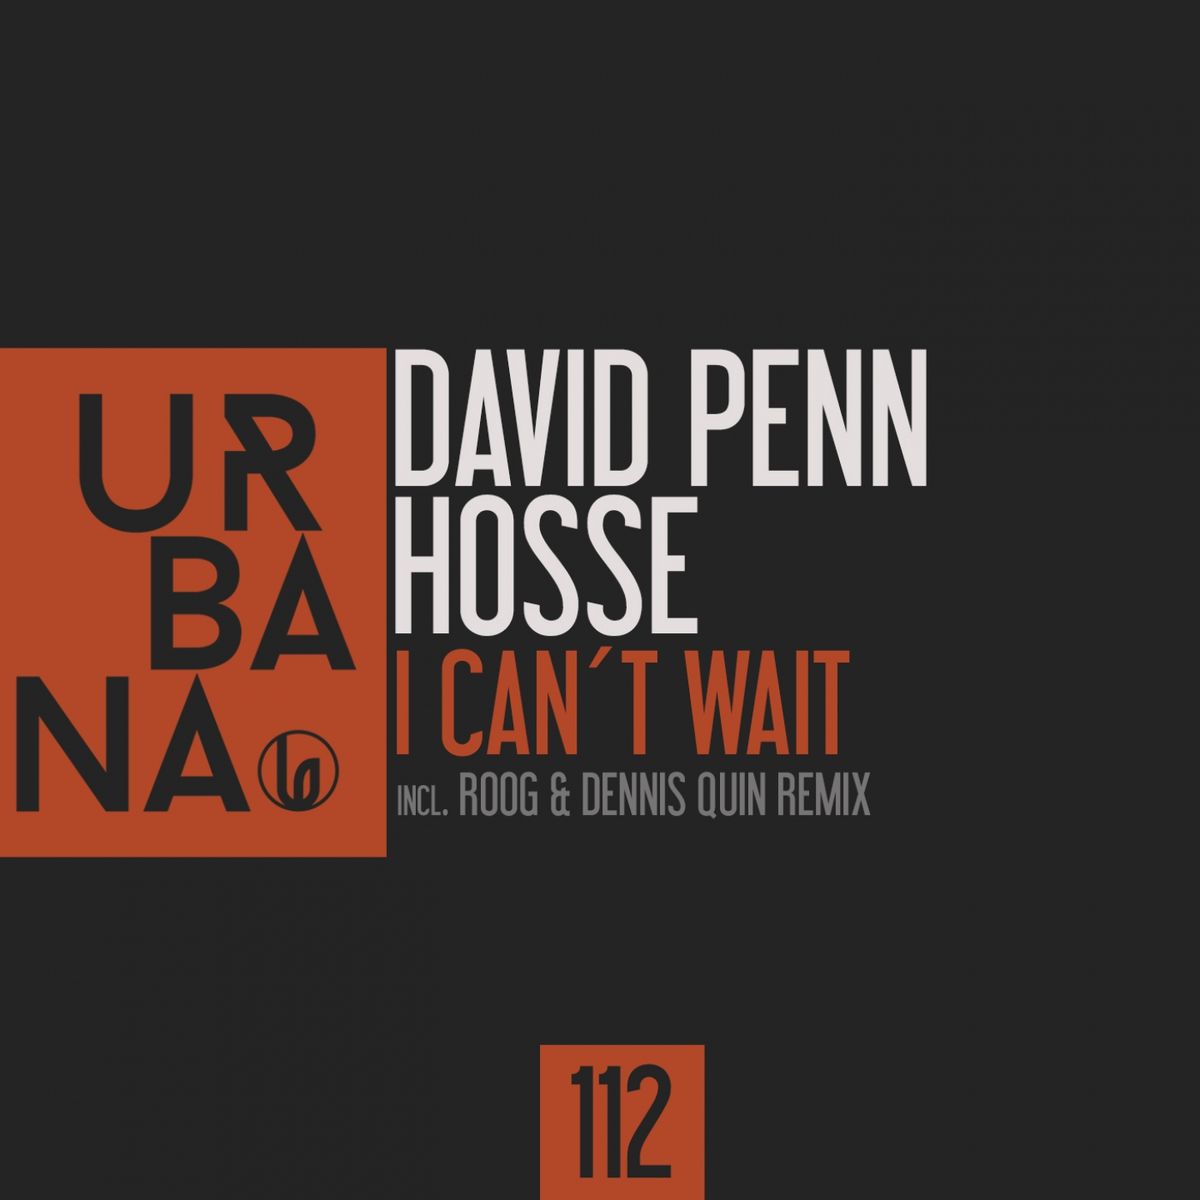 David Penn & Hosse - I Can't Wait / Urbana Recordings